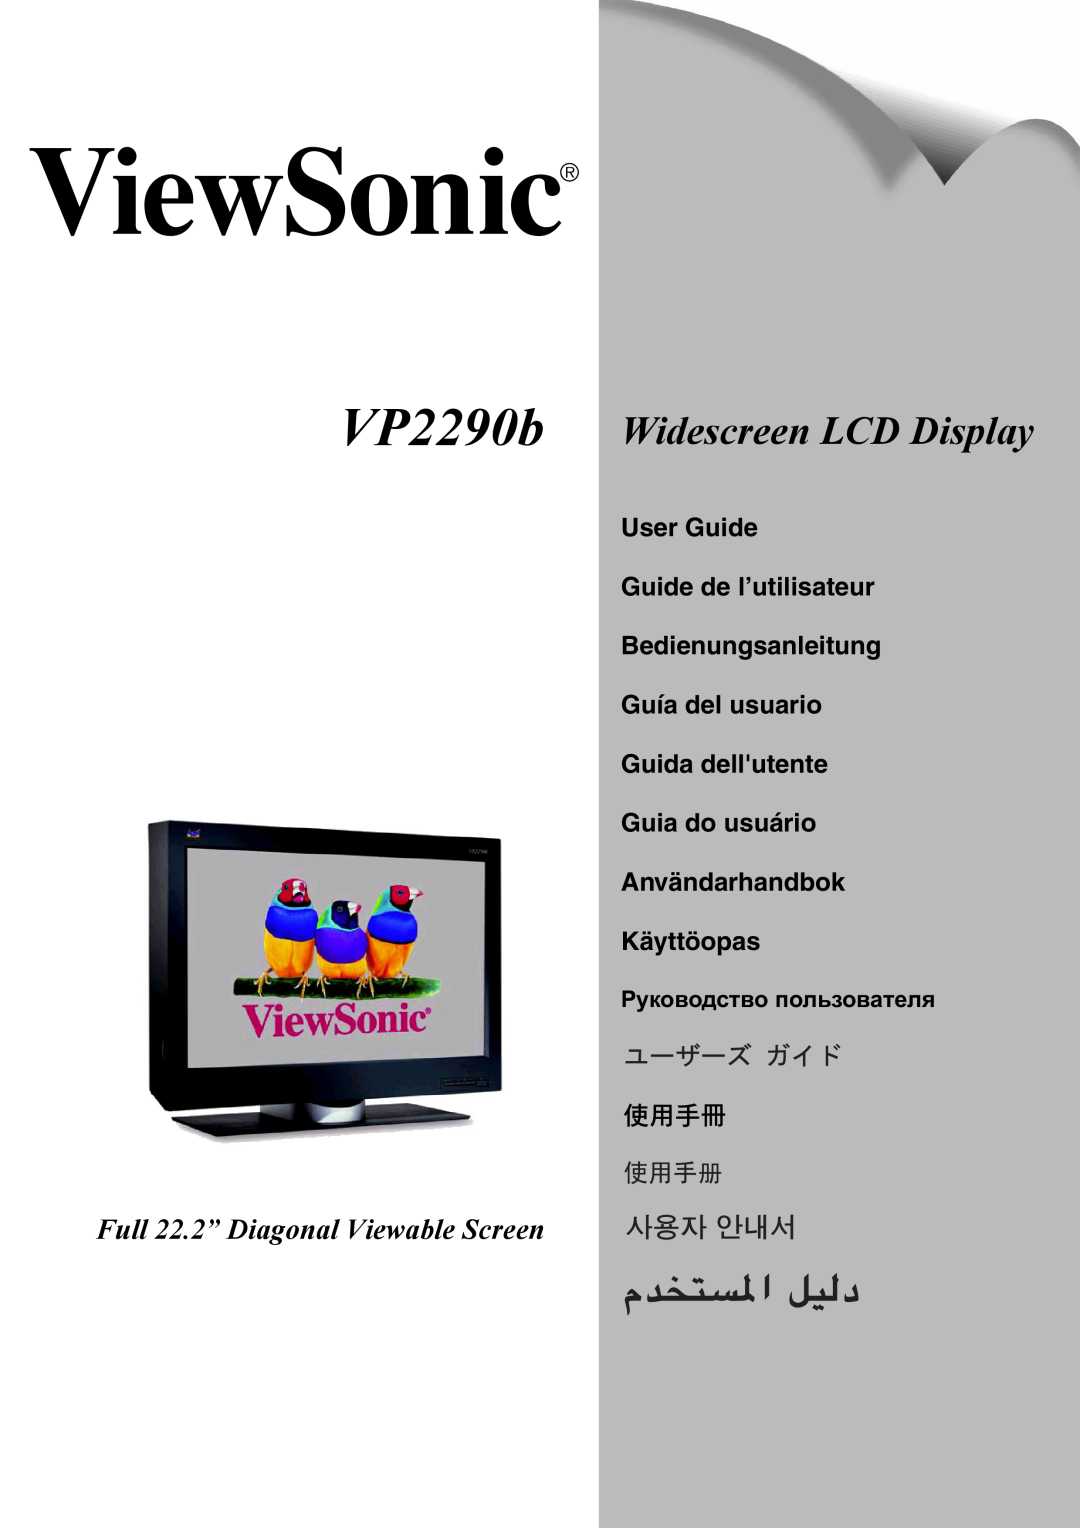 ViewSonic VP2290B manual VP2290b Widescreen LCD Display, Full 22.2” Diagonal Viewable Screen, Käyttöopas 